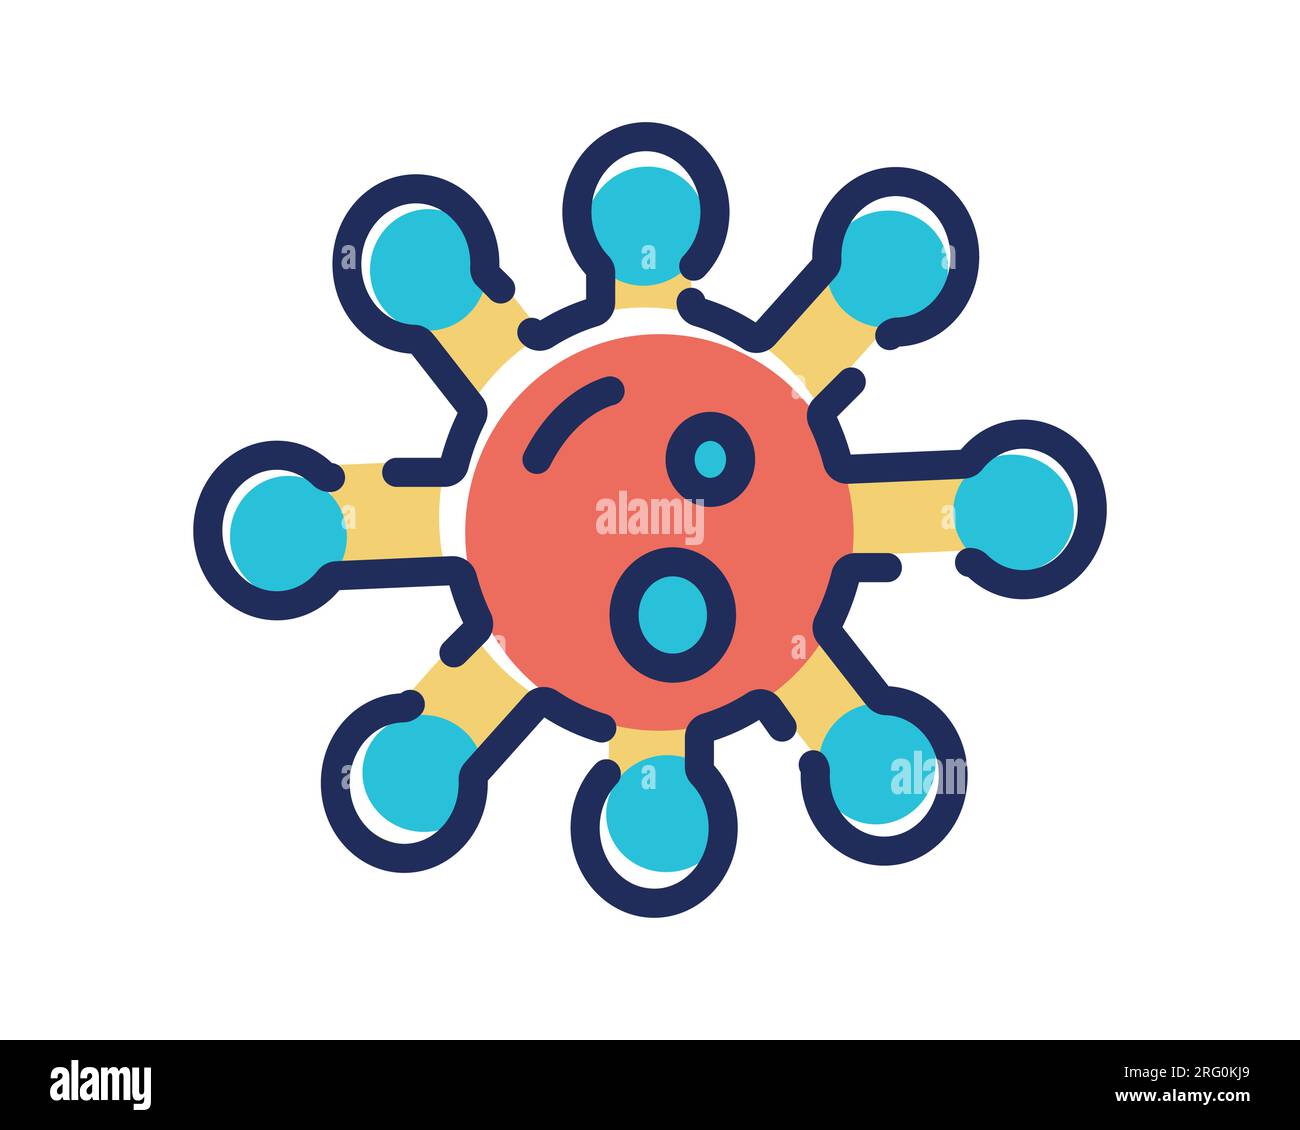 Coronavirus flaches Symboldesign des Covid 19 Virus-Designs Vektor-Illustration Stock Vektor